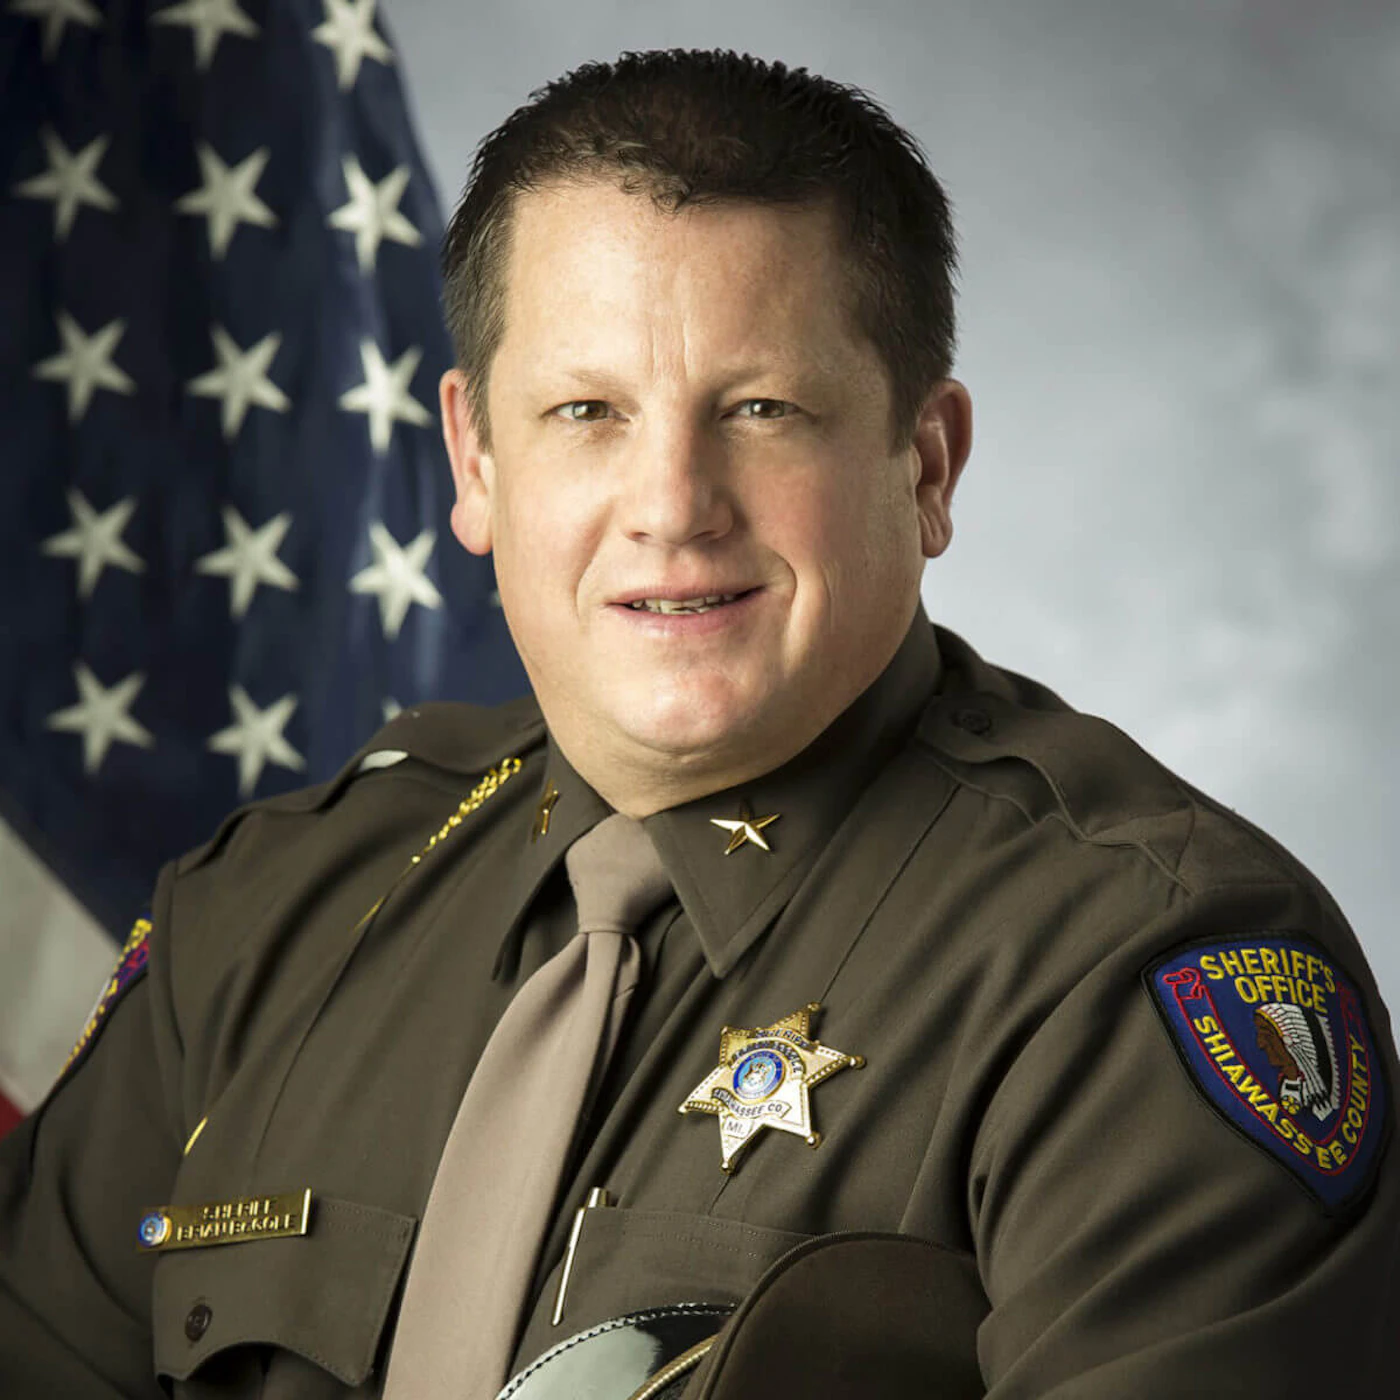 Sheriff Brian BeGole. Photo courtesy the Michigan Sheriffs Association.